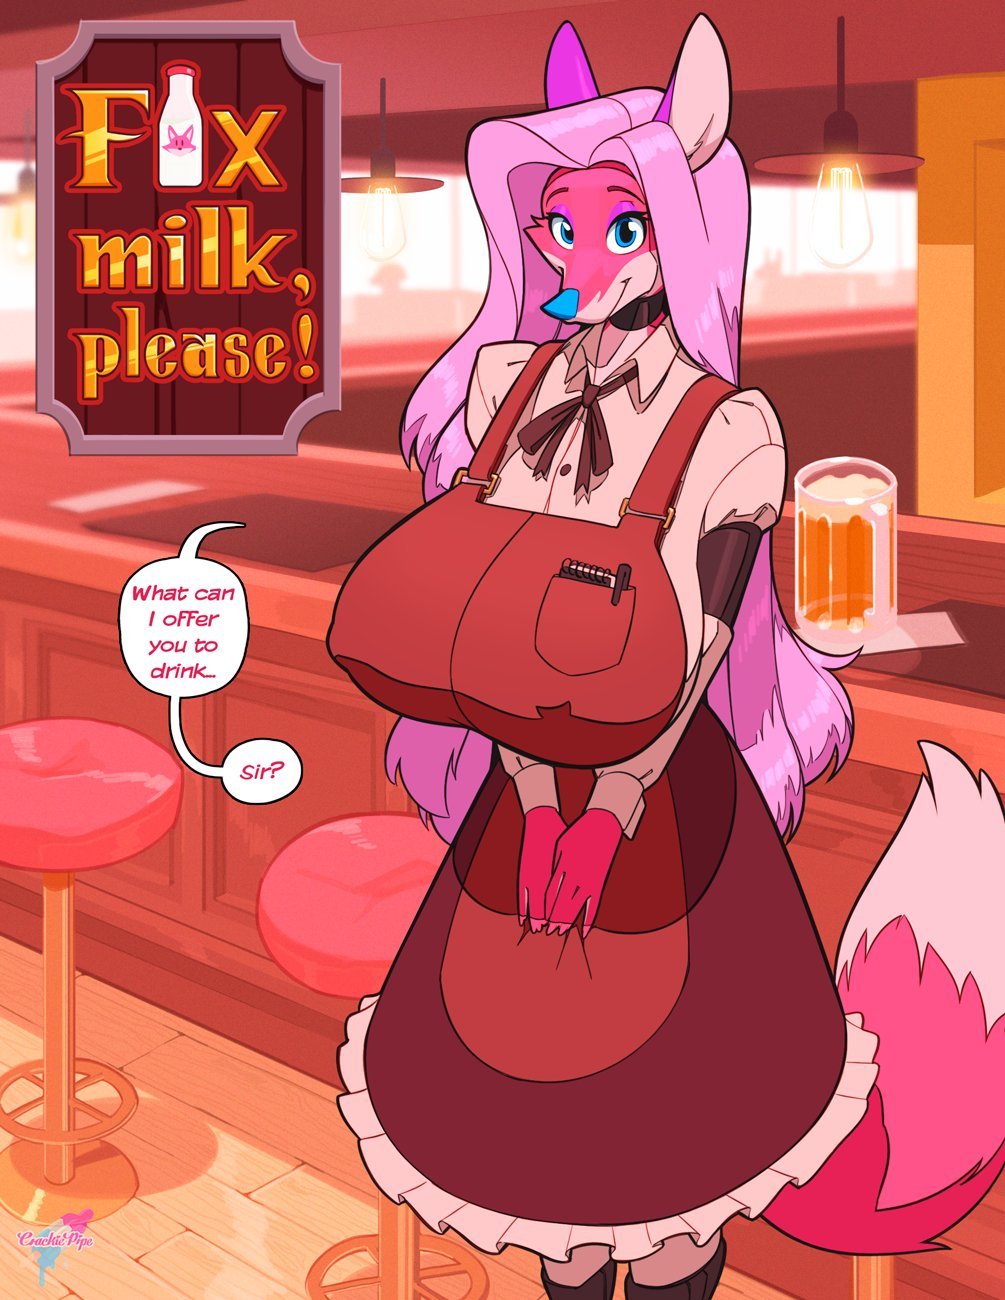 Furry Milky Boobs - Fox milk please! comic porn - HD Porn Comics